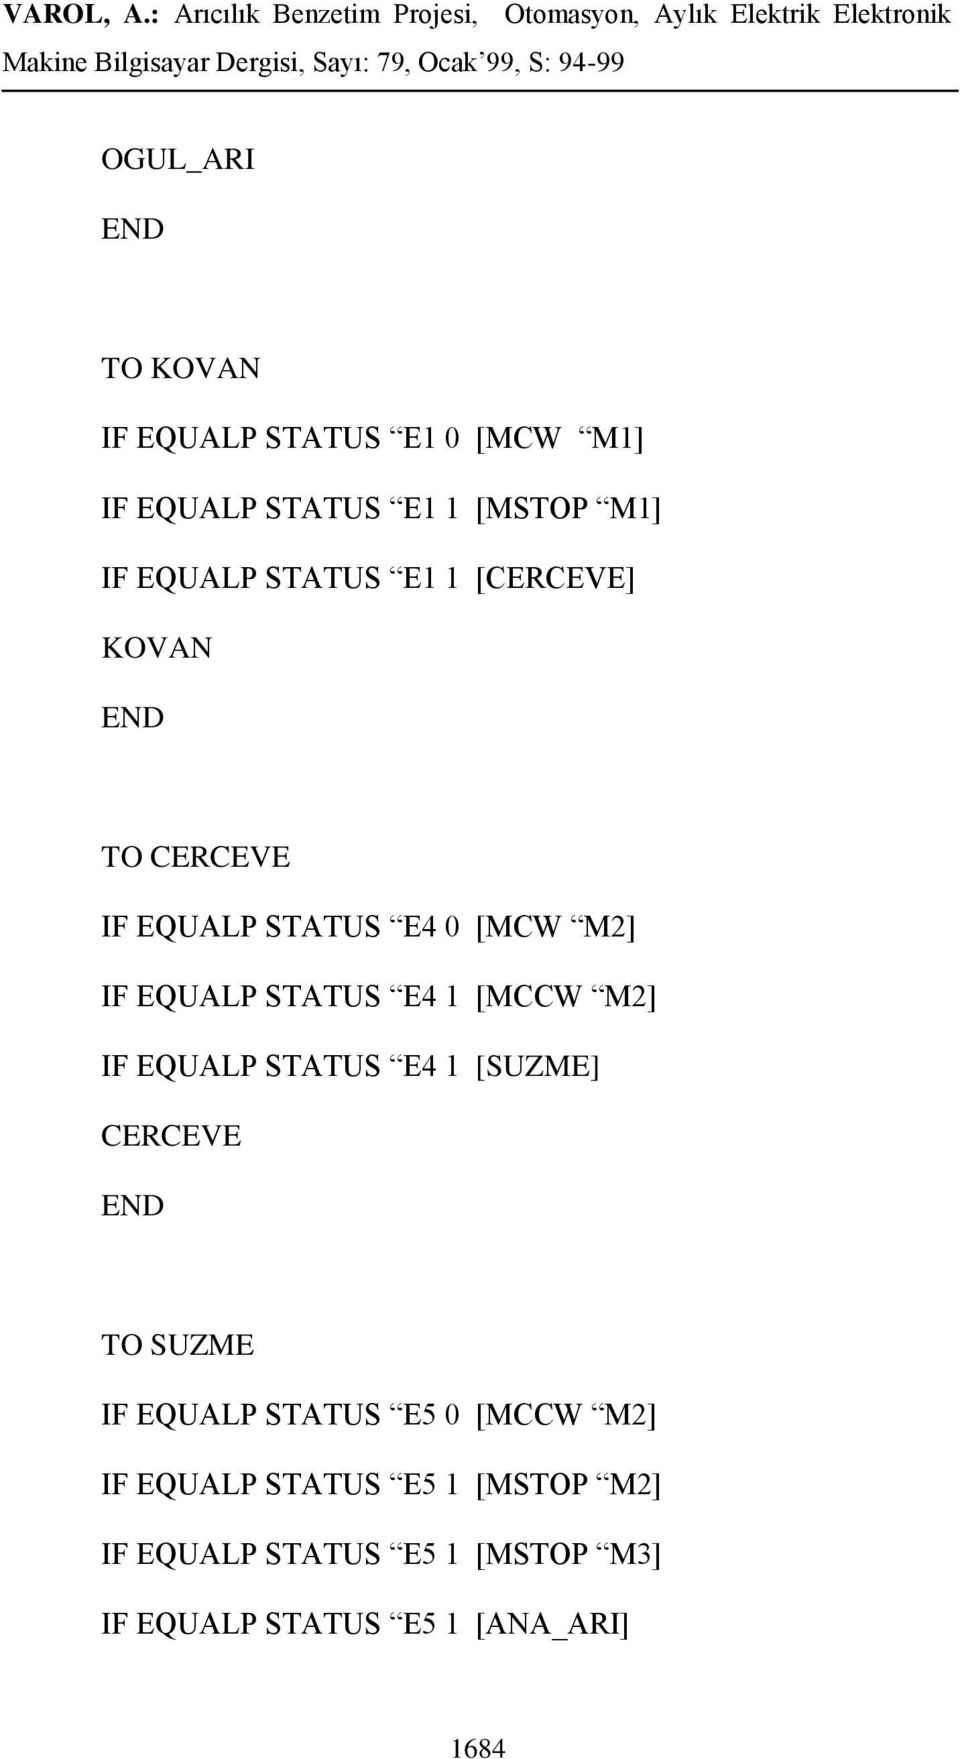 [MCCW M2] IF EQUALP STATUS E4 1 [SUZME] CERCEVE END TO SUZME IF EQUALP STATUS E5 0 [MCCW M2] IF